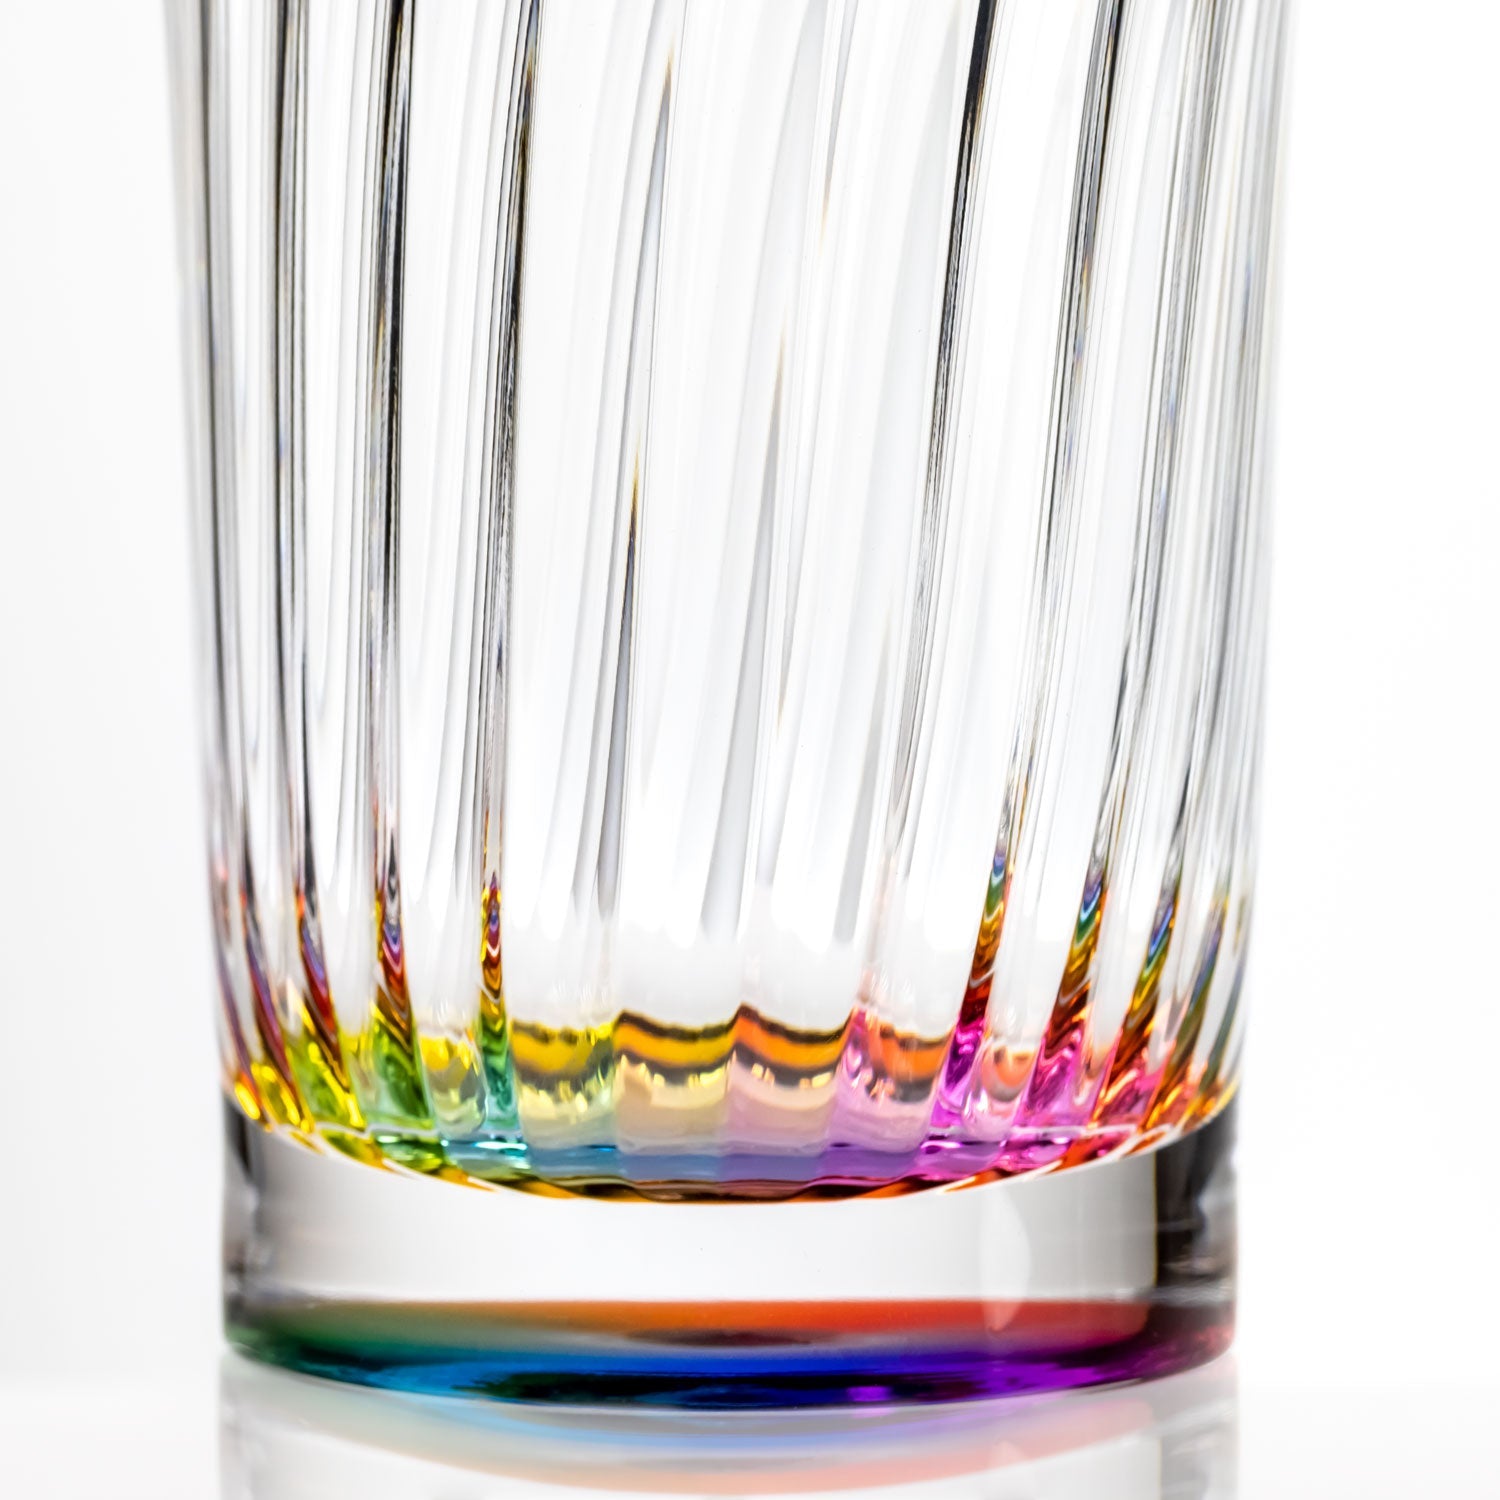 Merritt Venezia Acrylic Wine Glass, BPA-Free, Clear, Set of 4